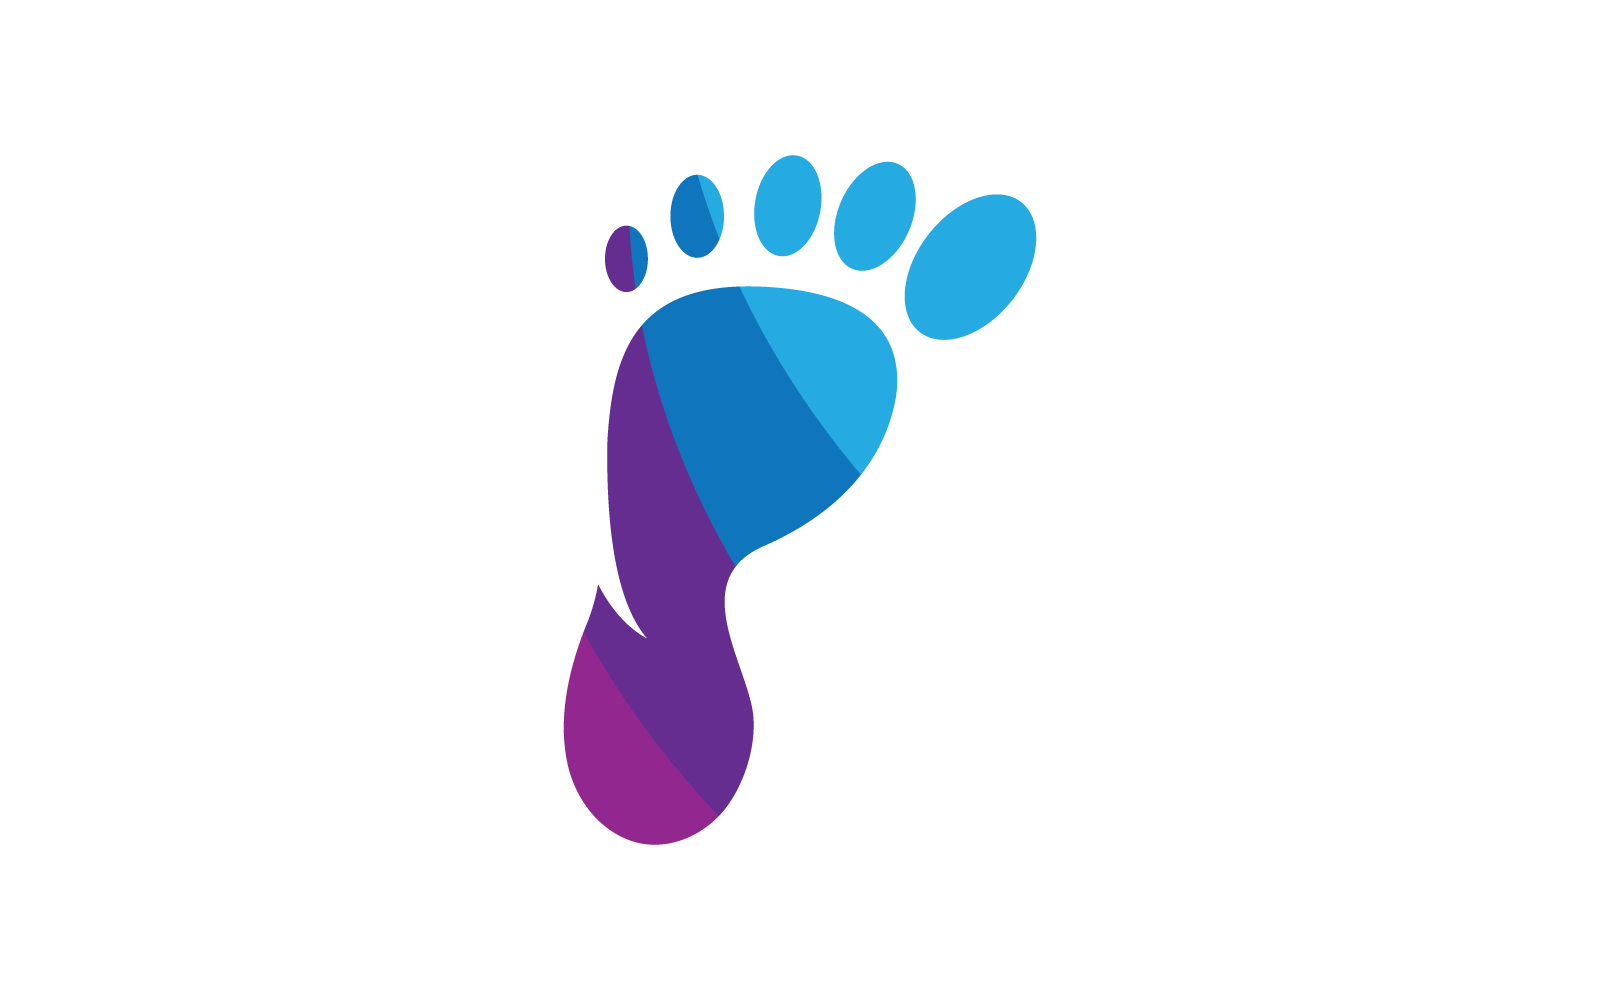 Foot illustration logo icon vector design